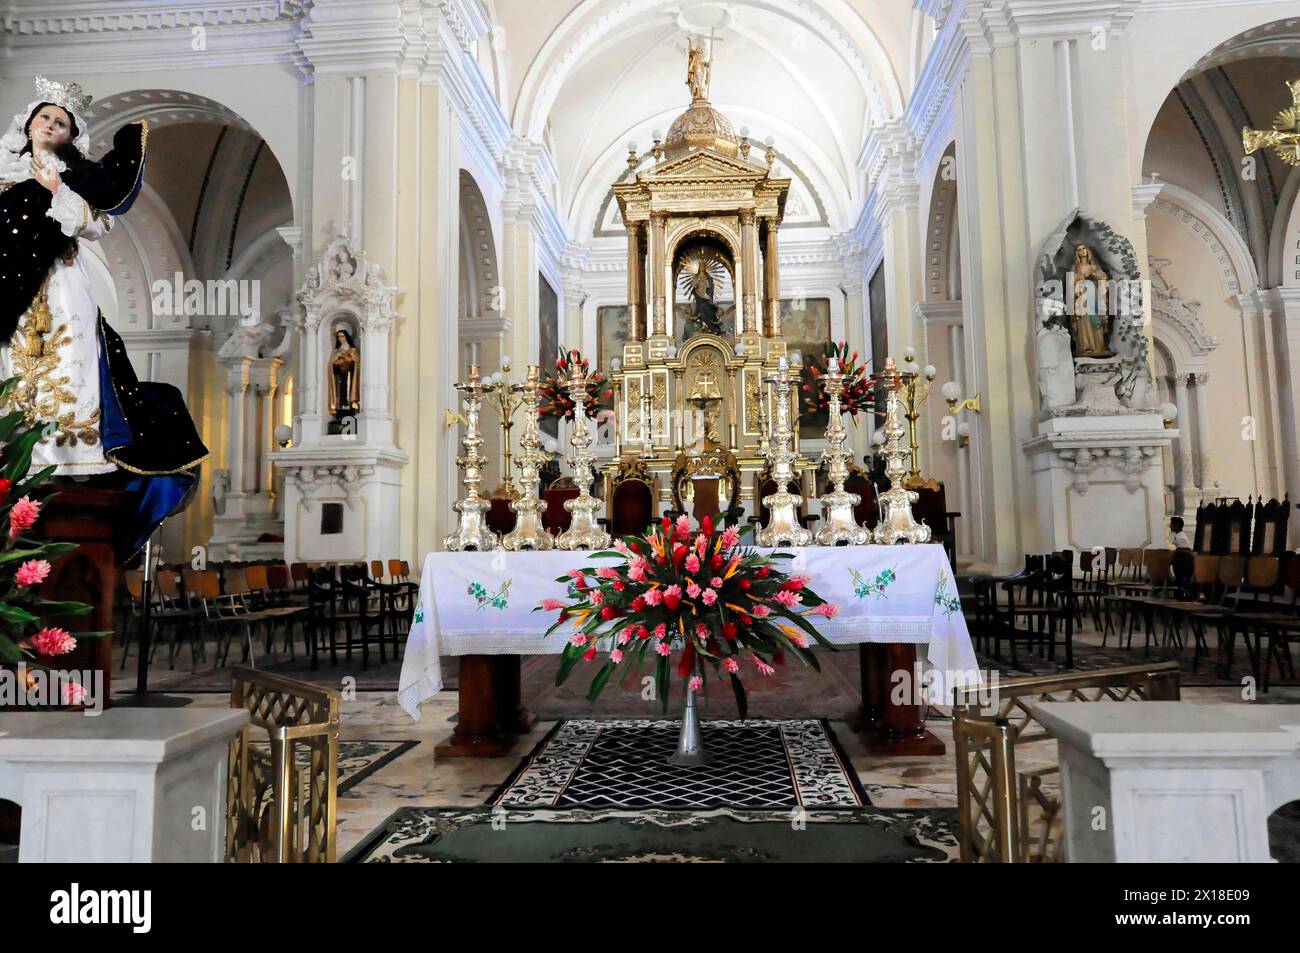 Catedral de la Asuncion, 1860, Leon, Nicaragua, Kirchenaltar mit goldenen Elementen und Blumenschmuck in einer katholischen Kirche, Zentralamerika Stockfoto